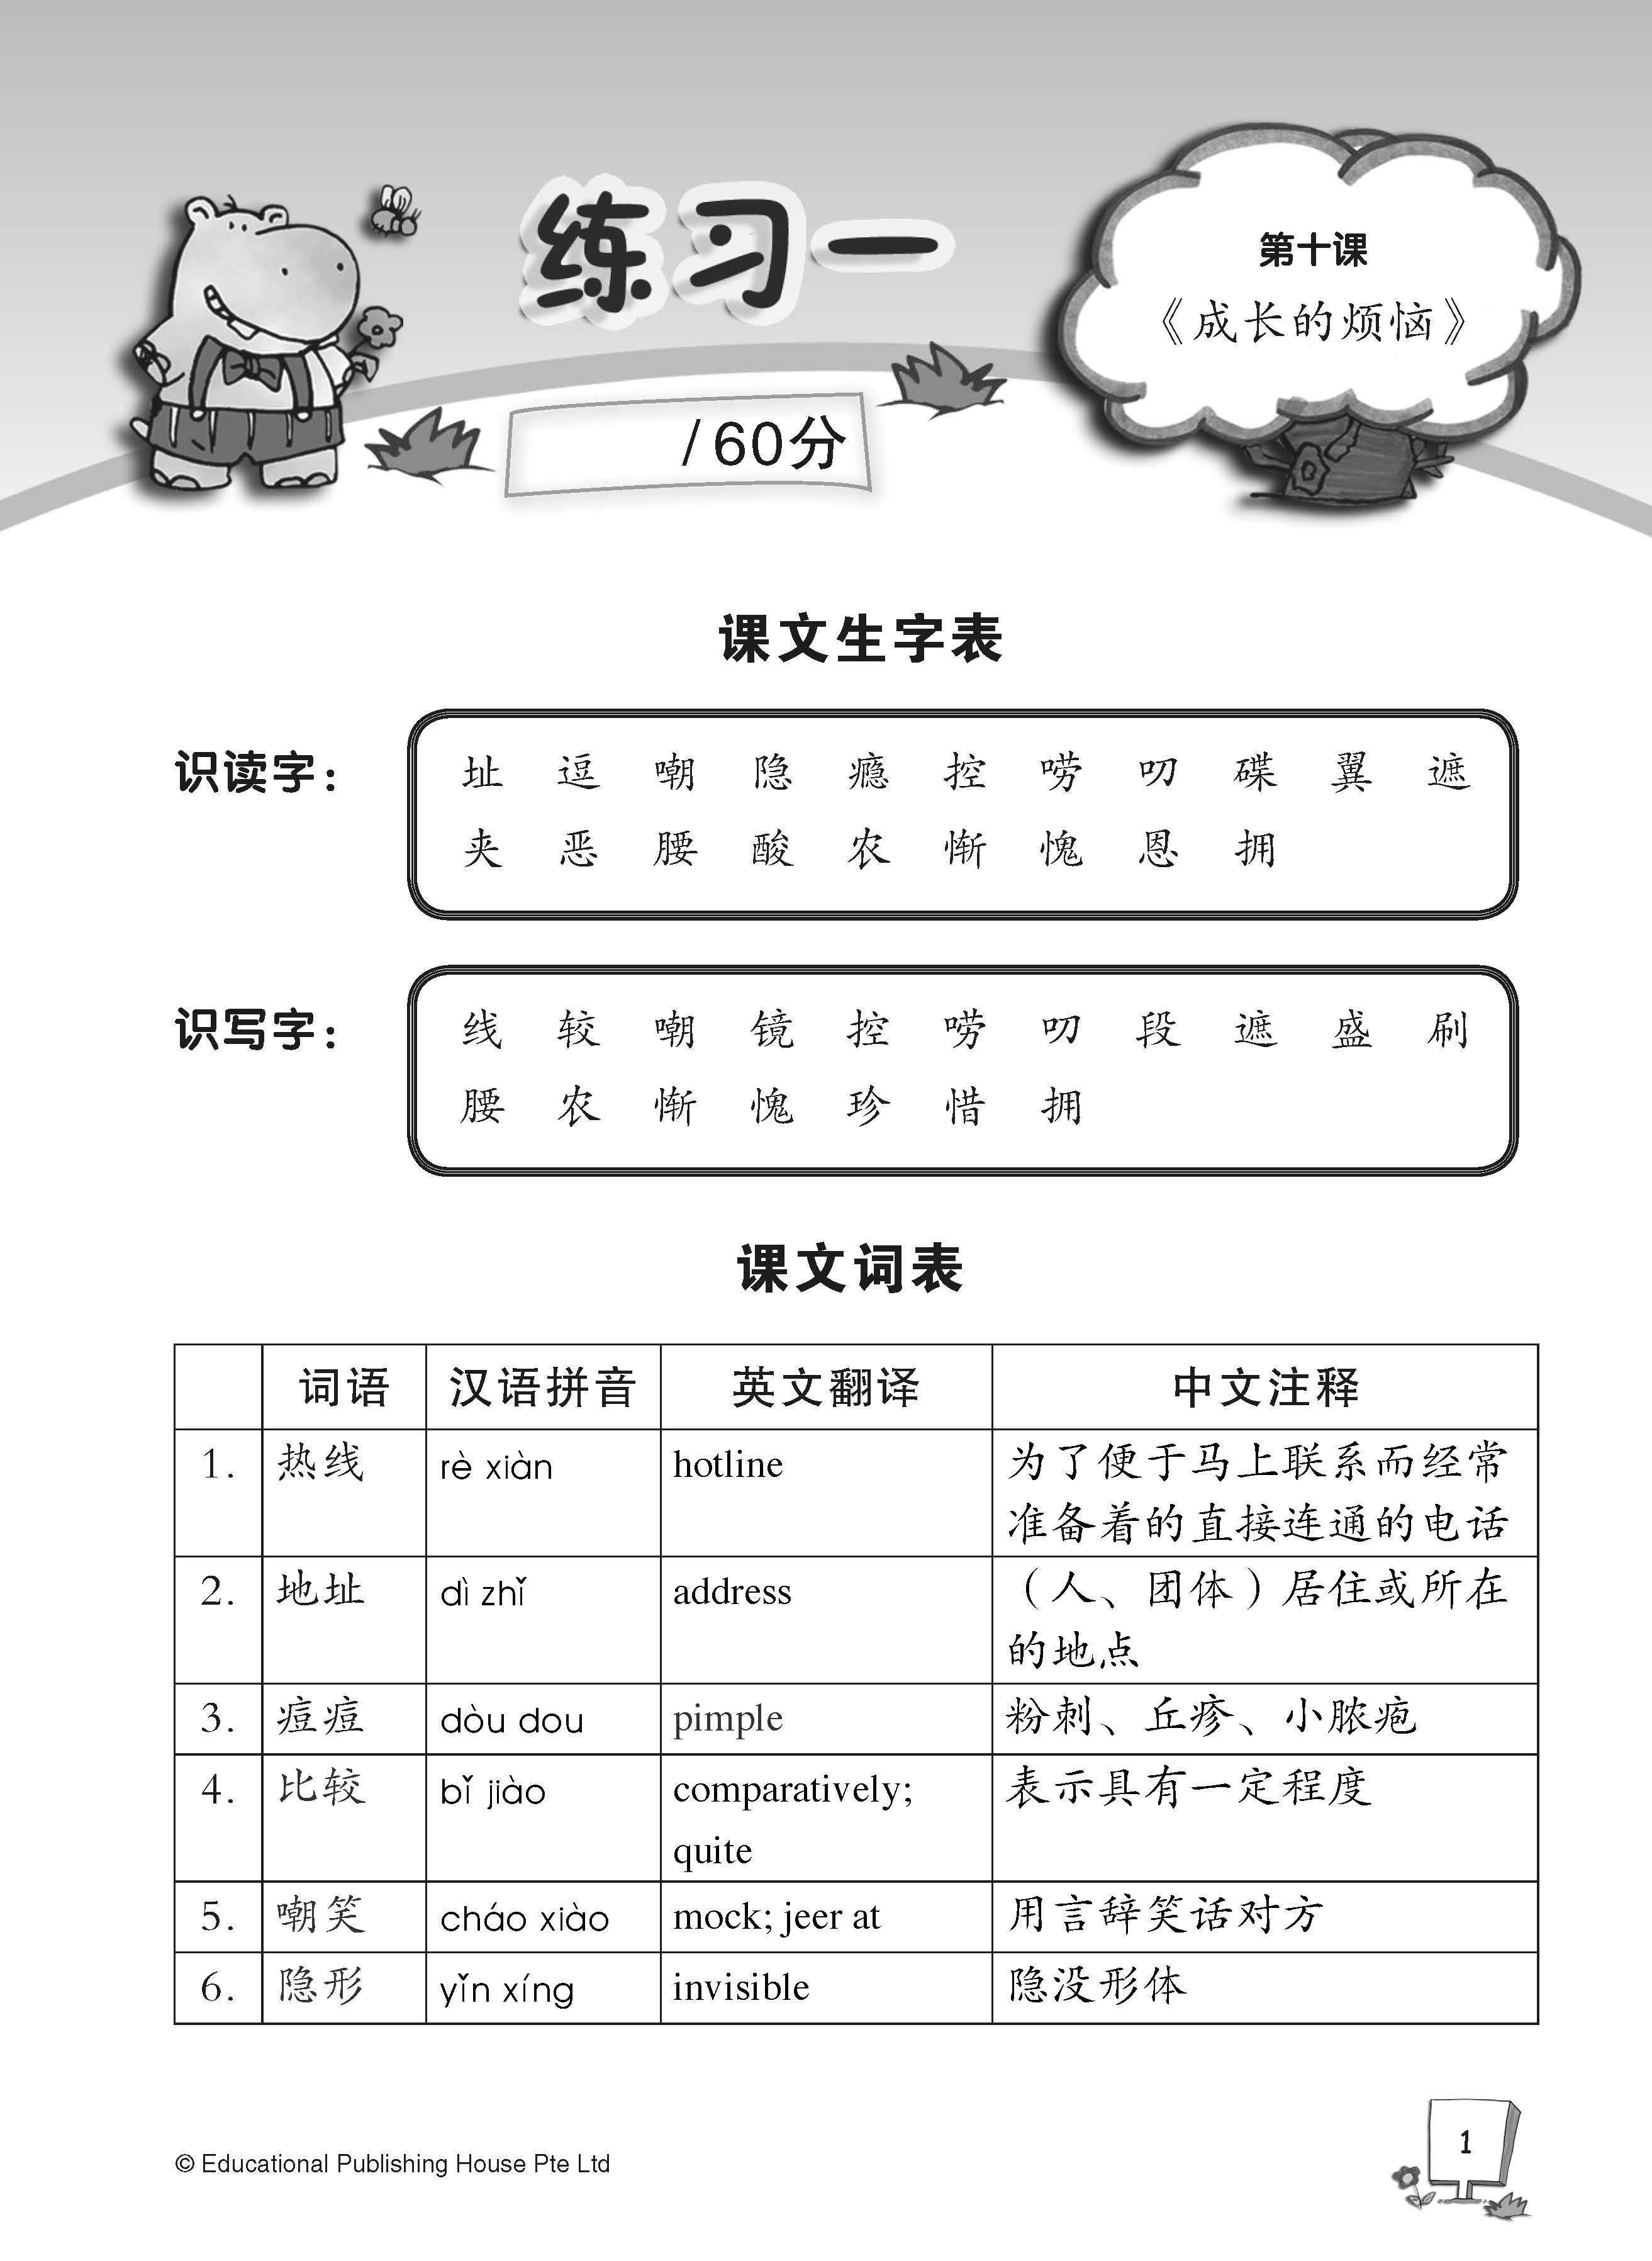 Primary 5B Higher Chinese Weekly Revision 每周高级华文课文复习 - _MS, BASIC, CHINESE, EDUCATIONAL PUBLISHING HOUSE, PRIMARY 5